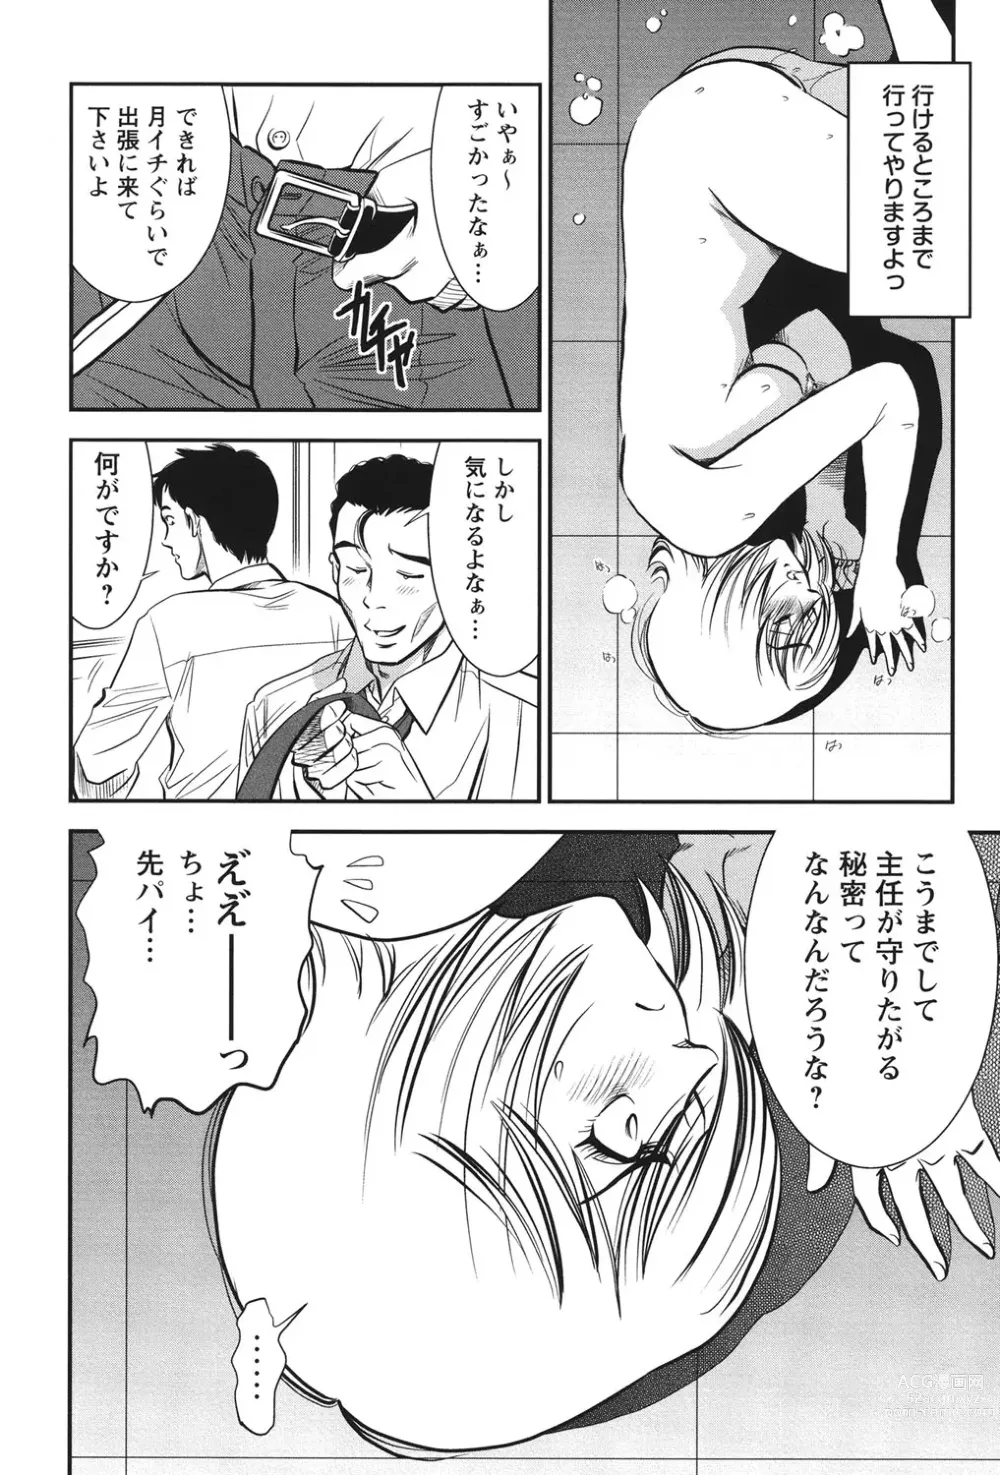 Page 203 of manga Melty Moon Ugly Man Rape